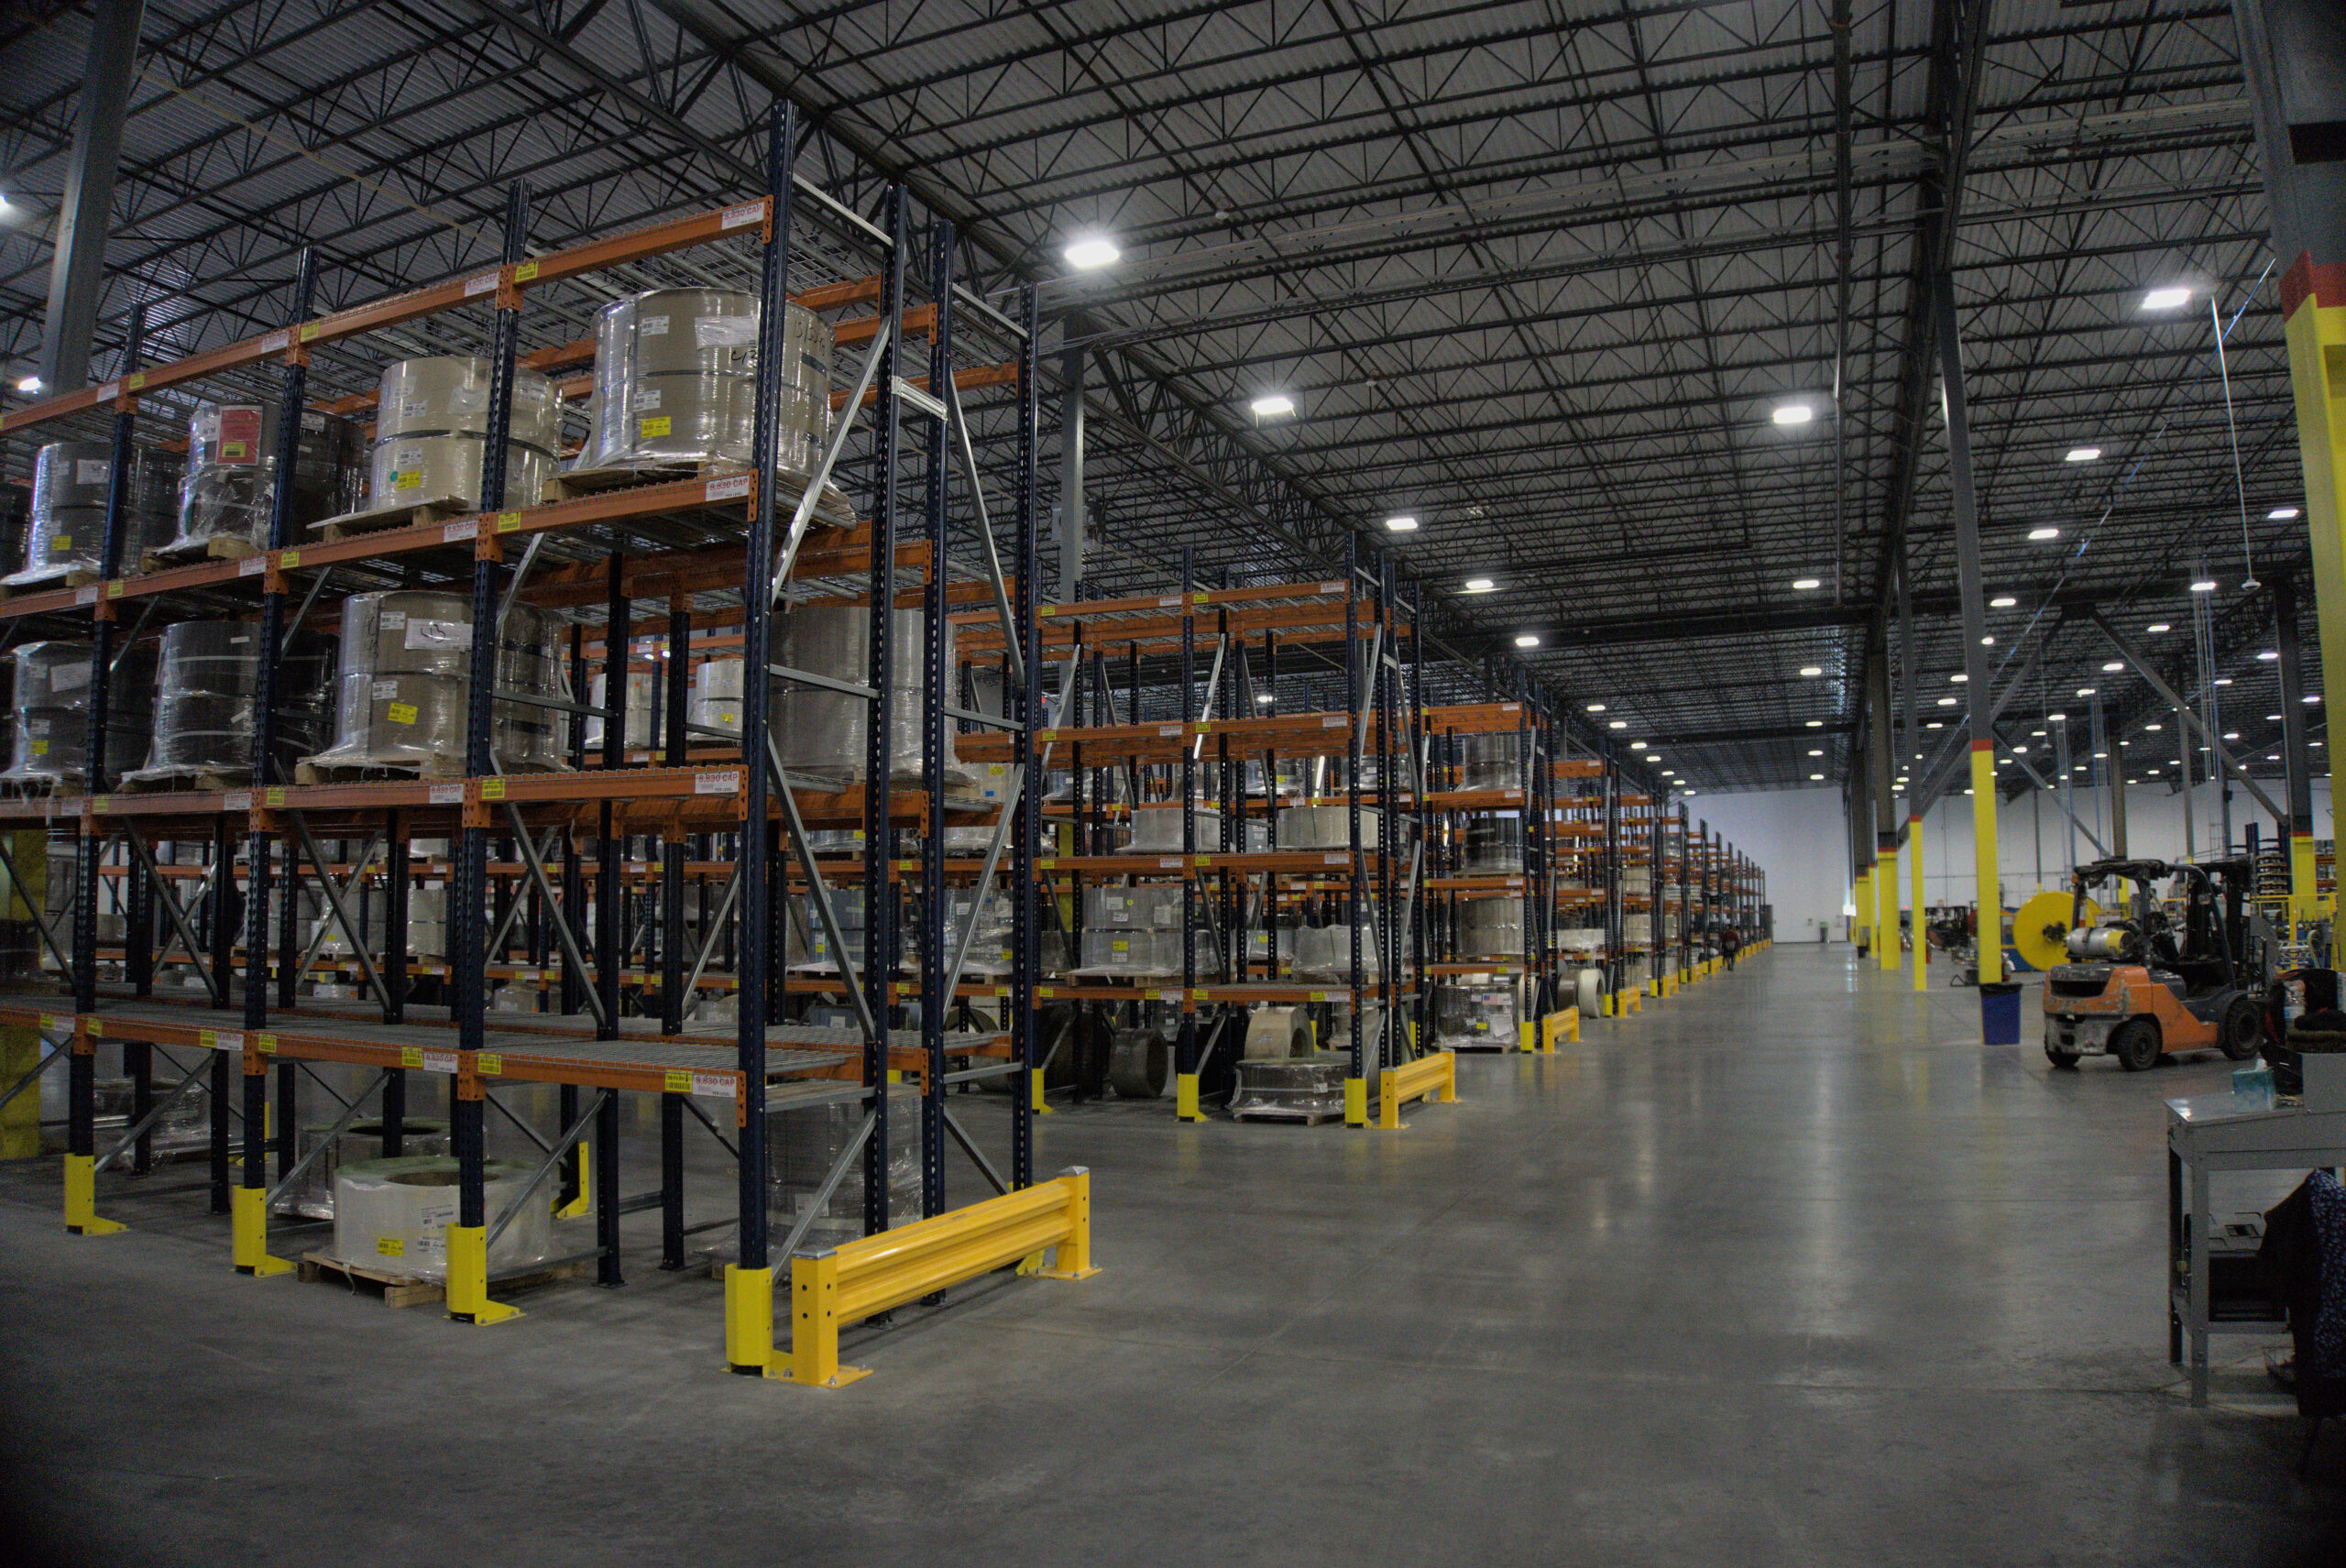 pallet rack solution for warehouse